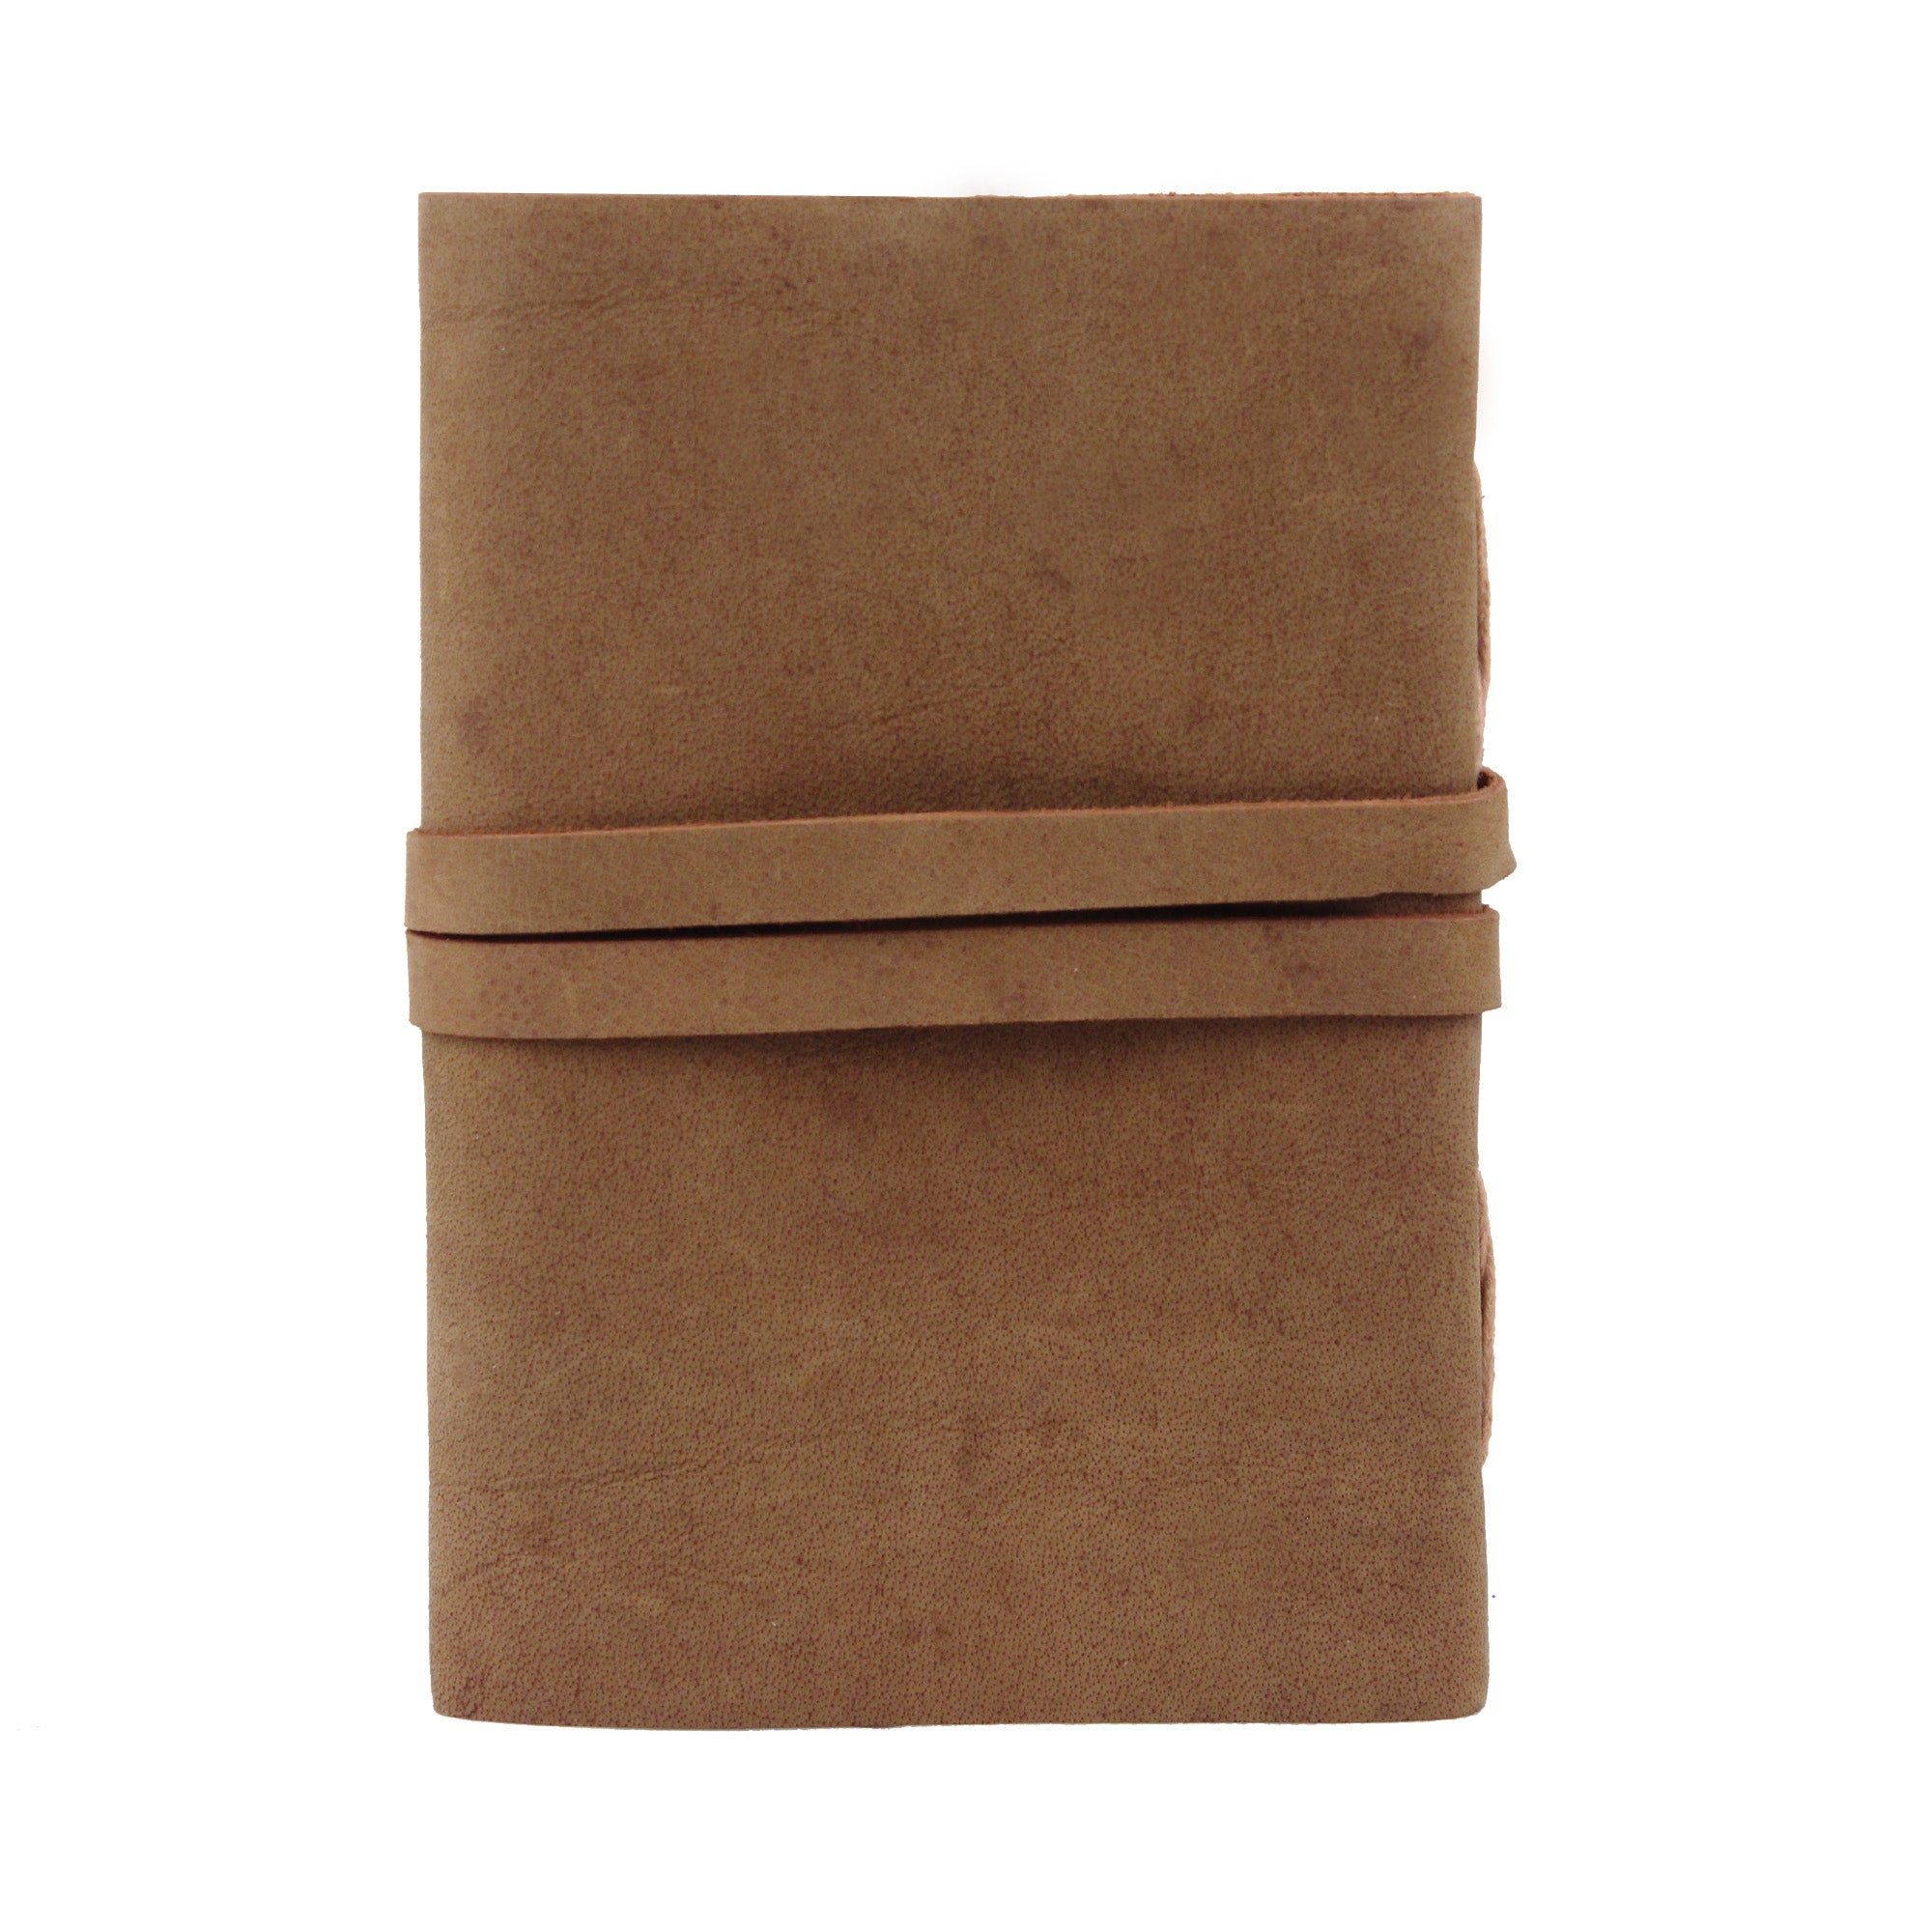 Dark Brown Buffalo Leather Journal Writing Pad